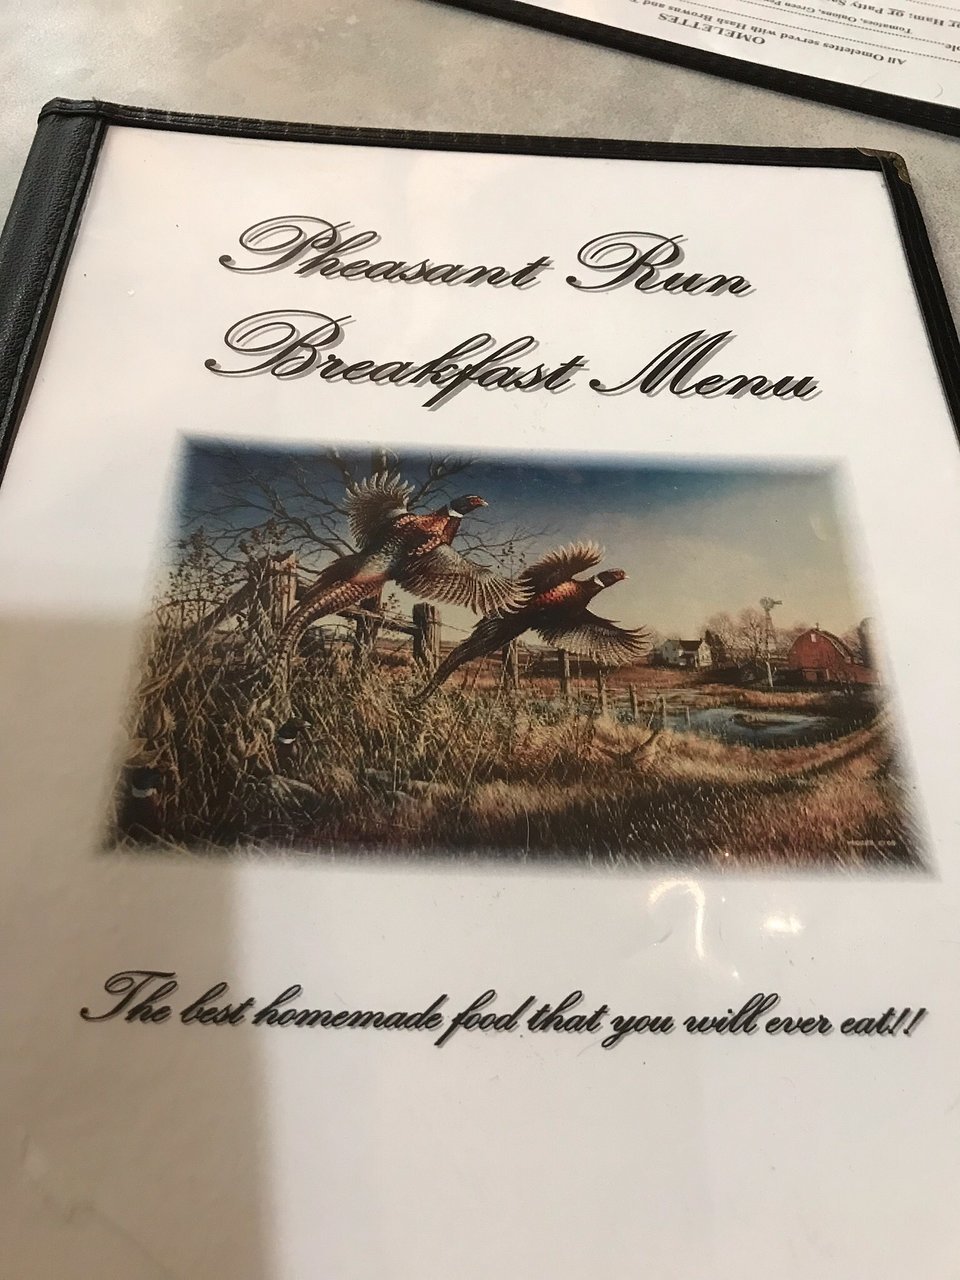 Pheasant Run Pancake House